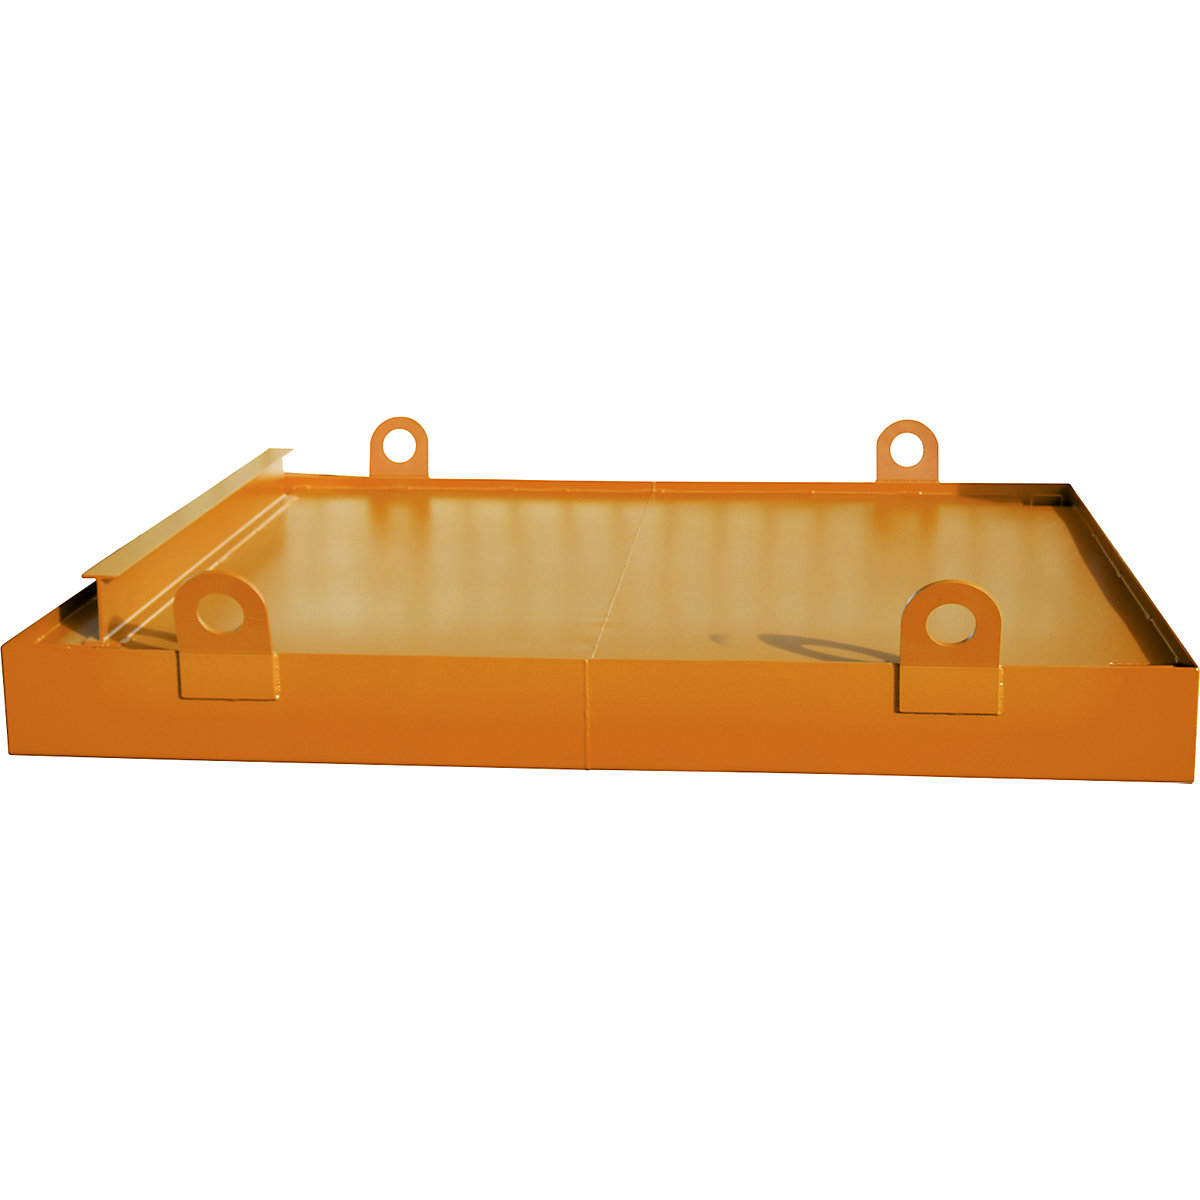 Prestrezna kadica za odlagalne zabojnike – eurokraft pro, za odlagalni zabojnik, prestrezna prostornina 1078 l, oranžne barve-7